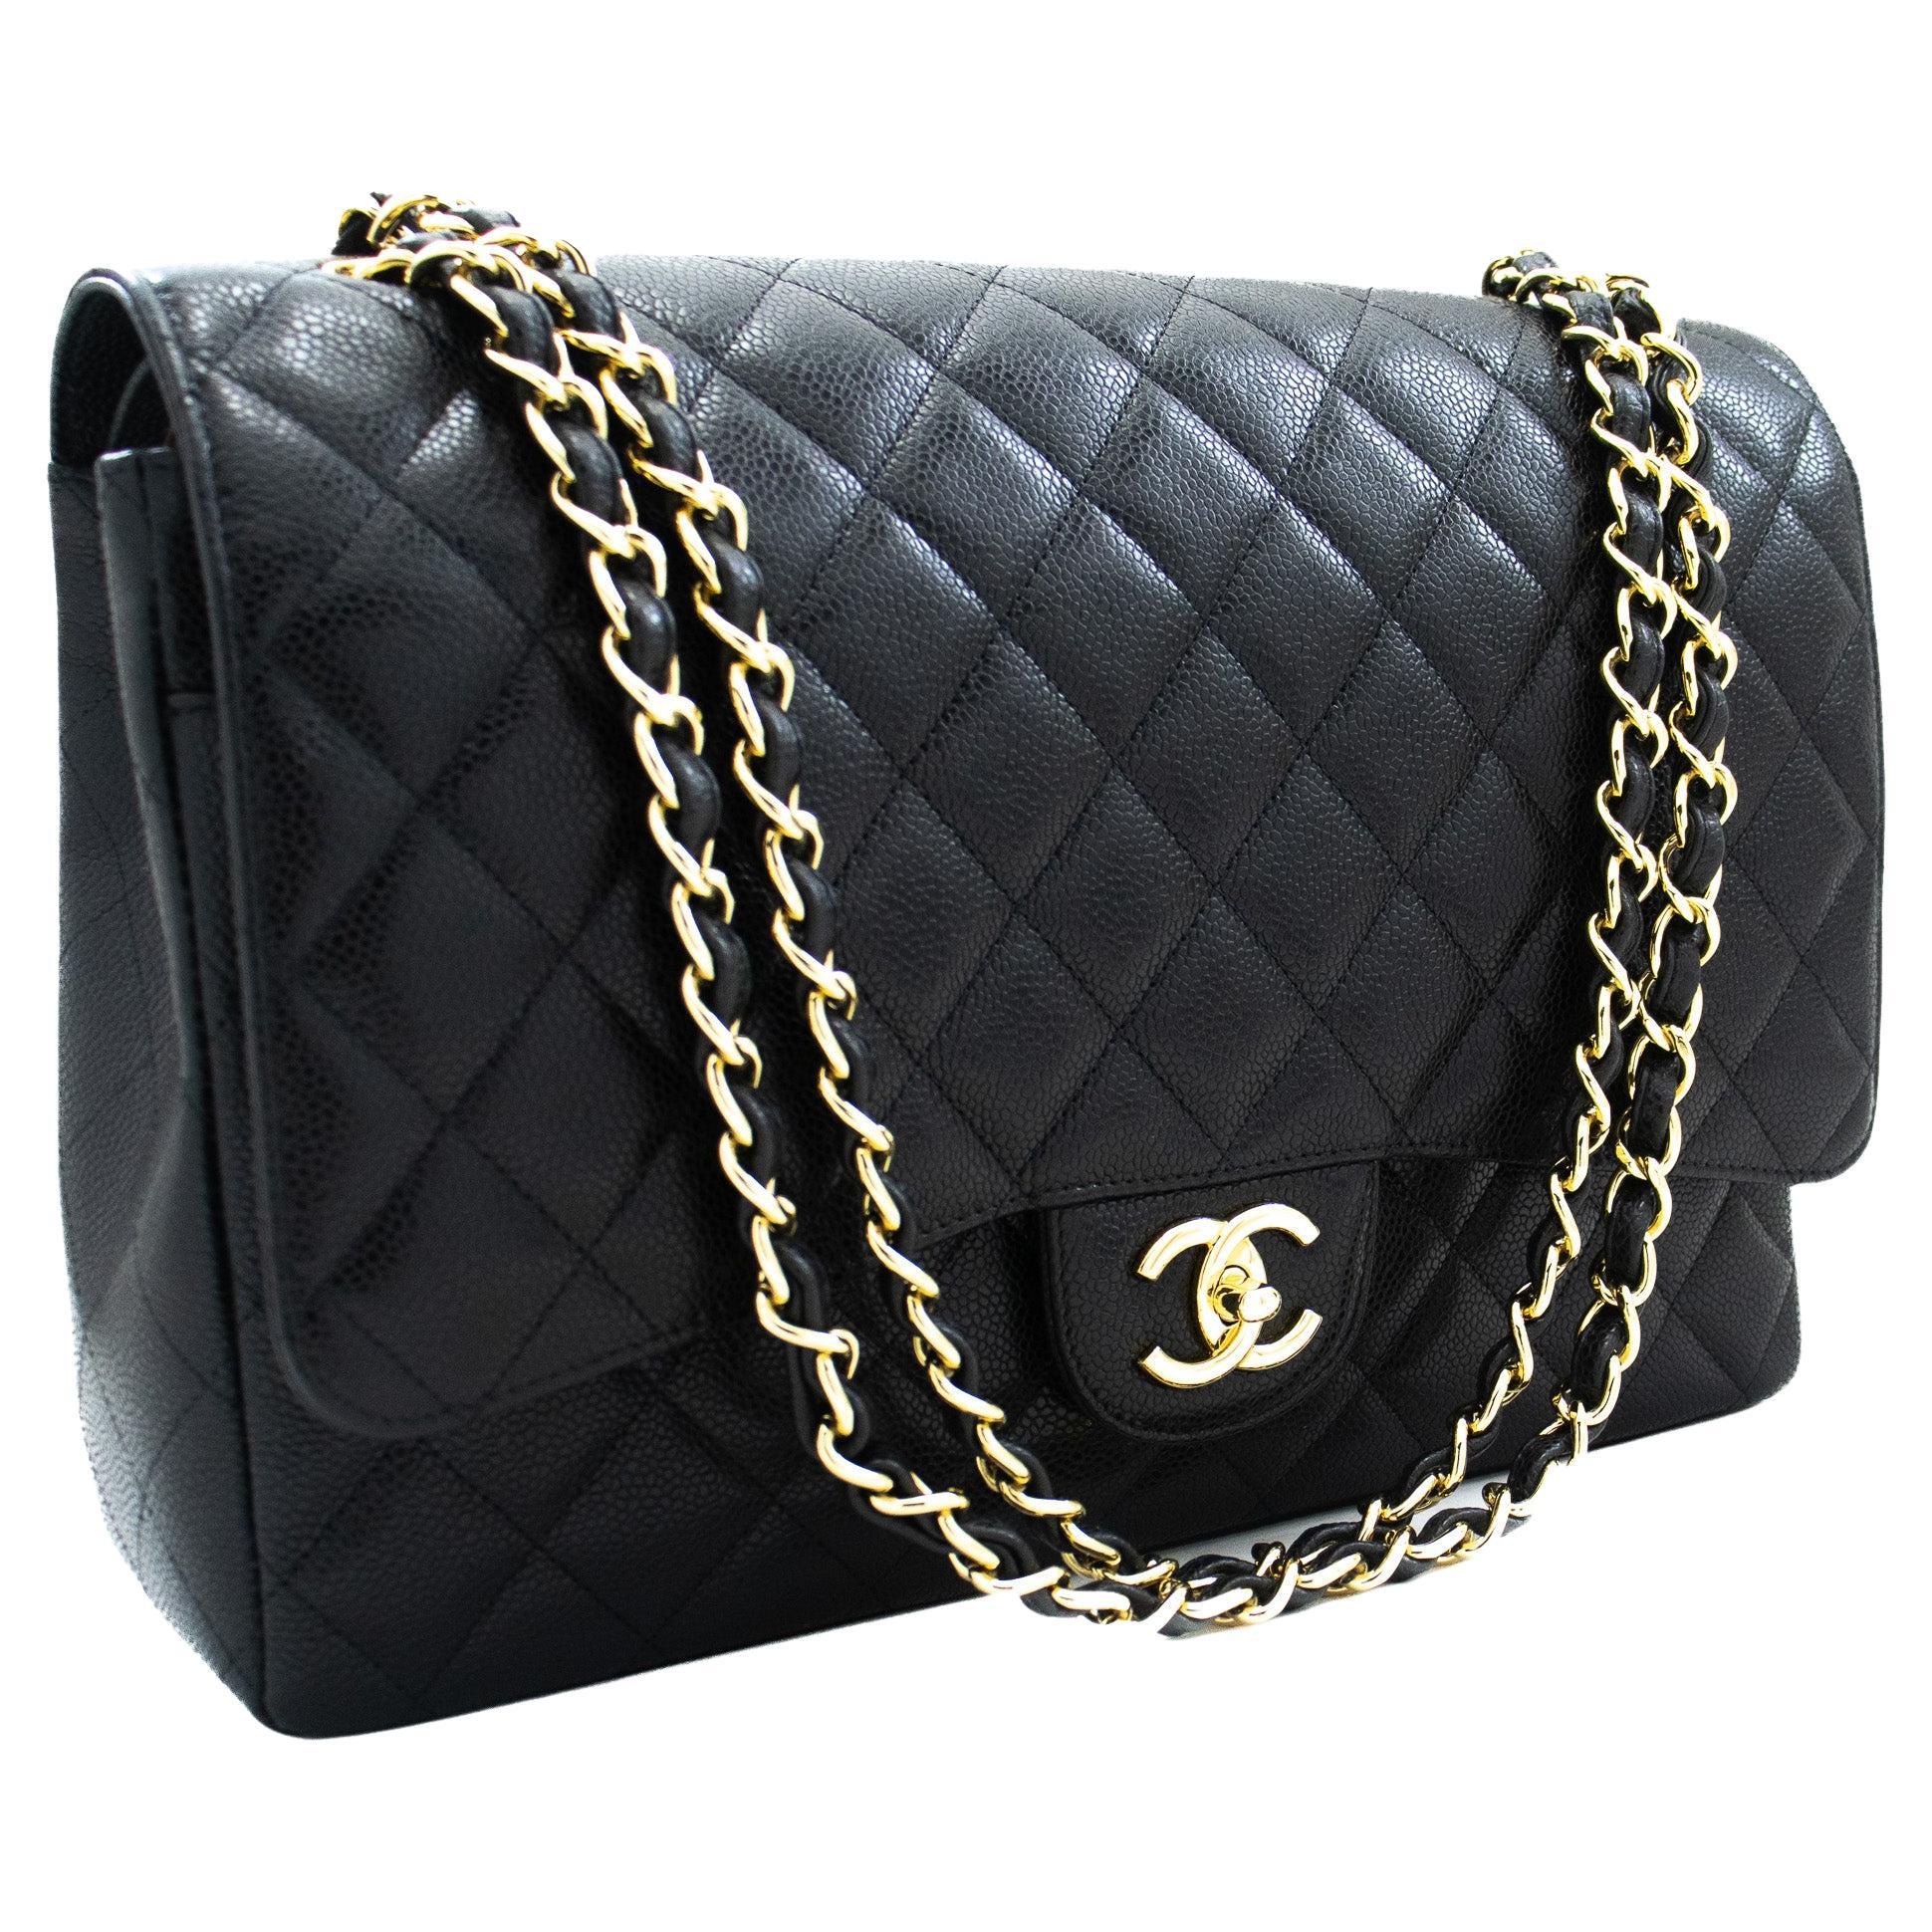 Chanel Maxi Classic Handbag Grained Calfskin Double Chain Flap Shoulder Bag